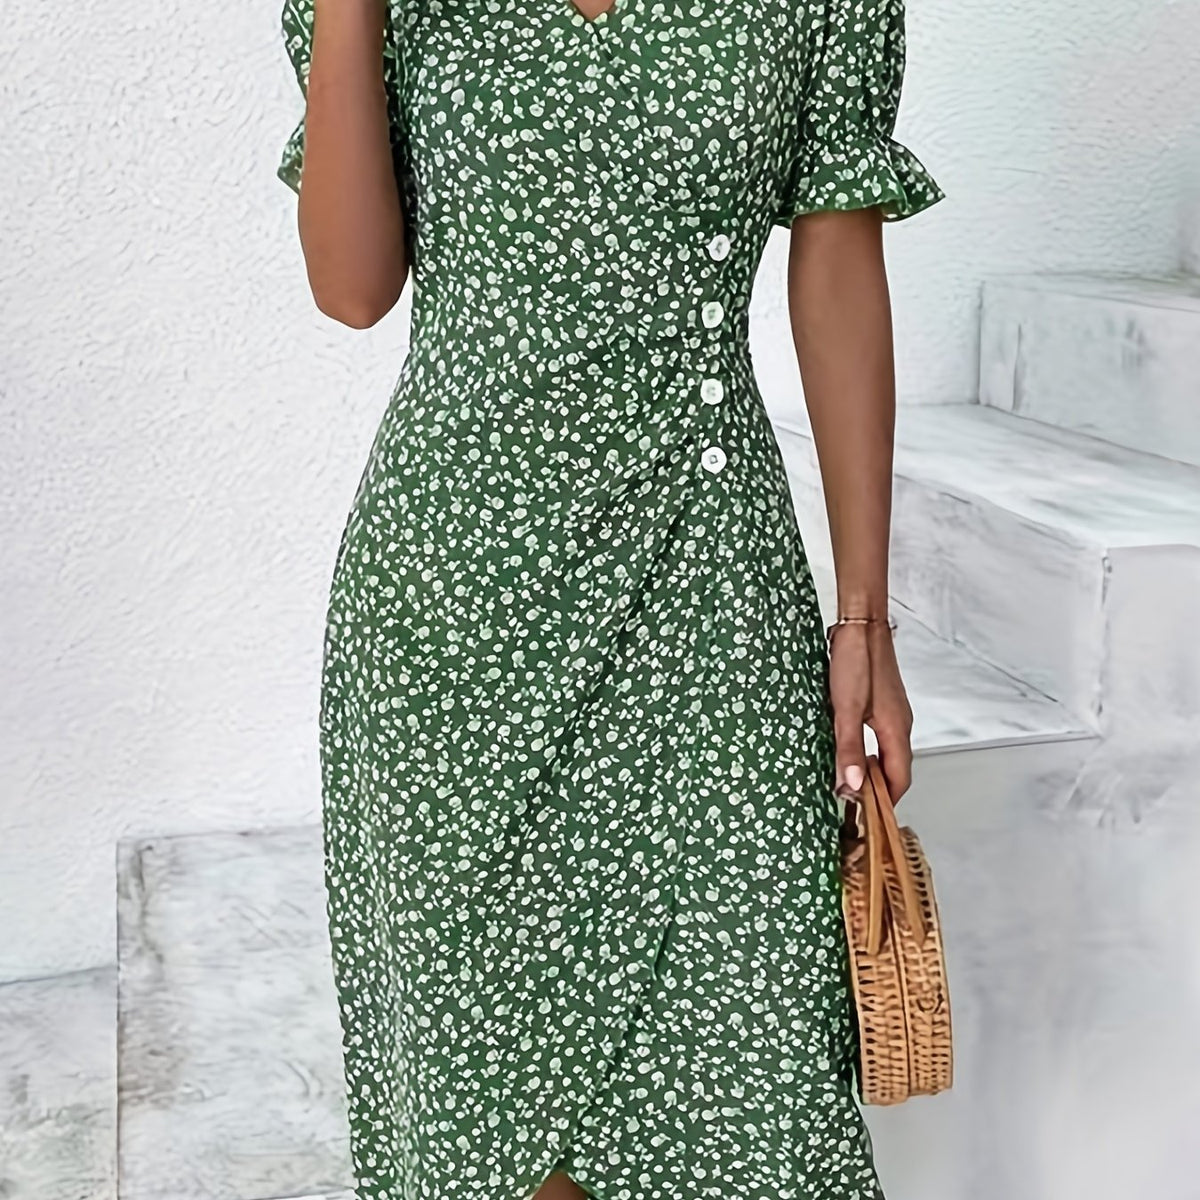 「lovevop」Ditsy Floral Print Dress, Elegant Button Front Short Sleeve Summer Dress, Women's Clothing